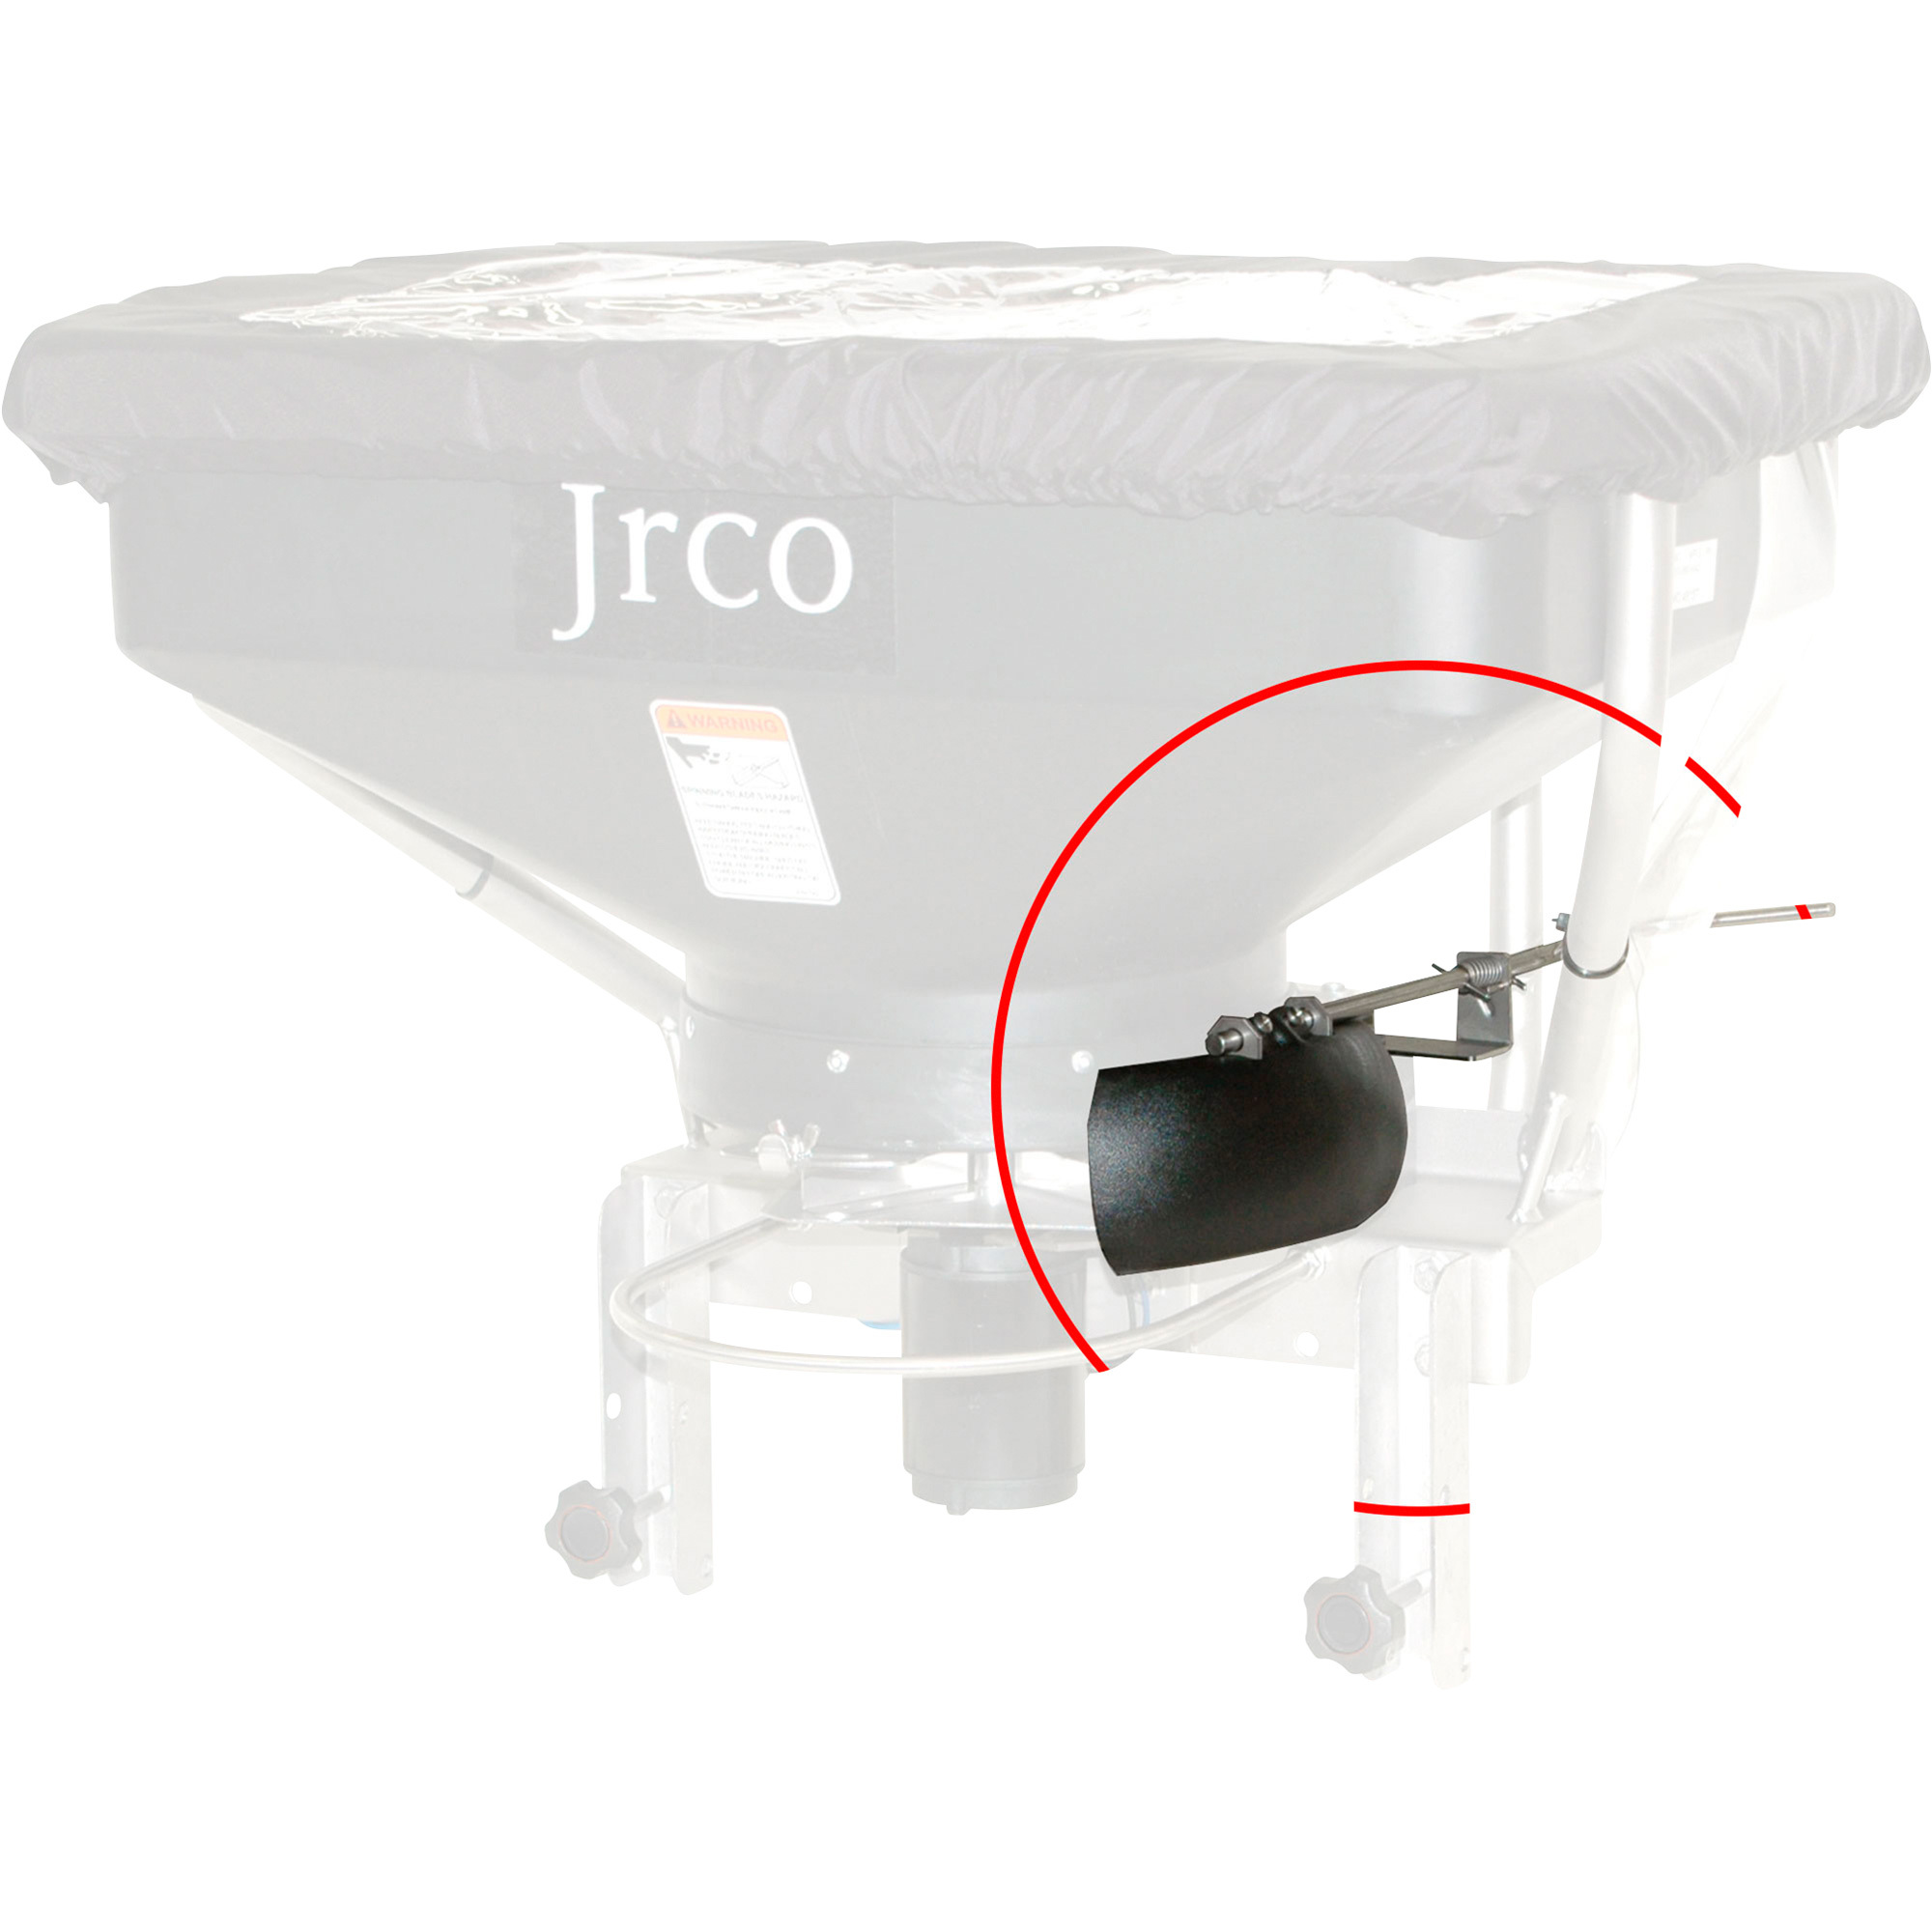 JRCO Spreader Side Deflector Kit â Model 7053.JRC